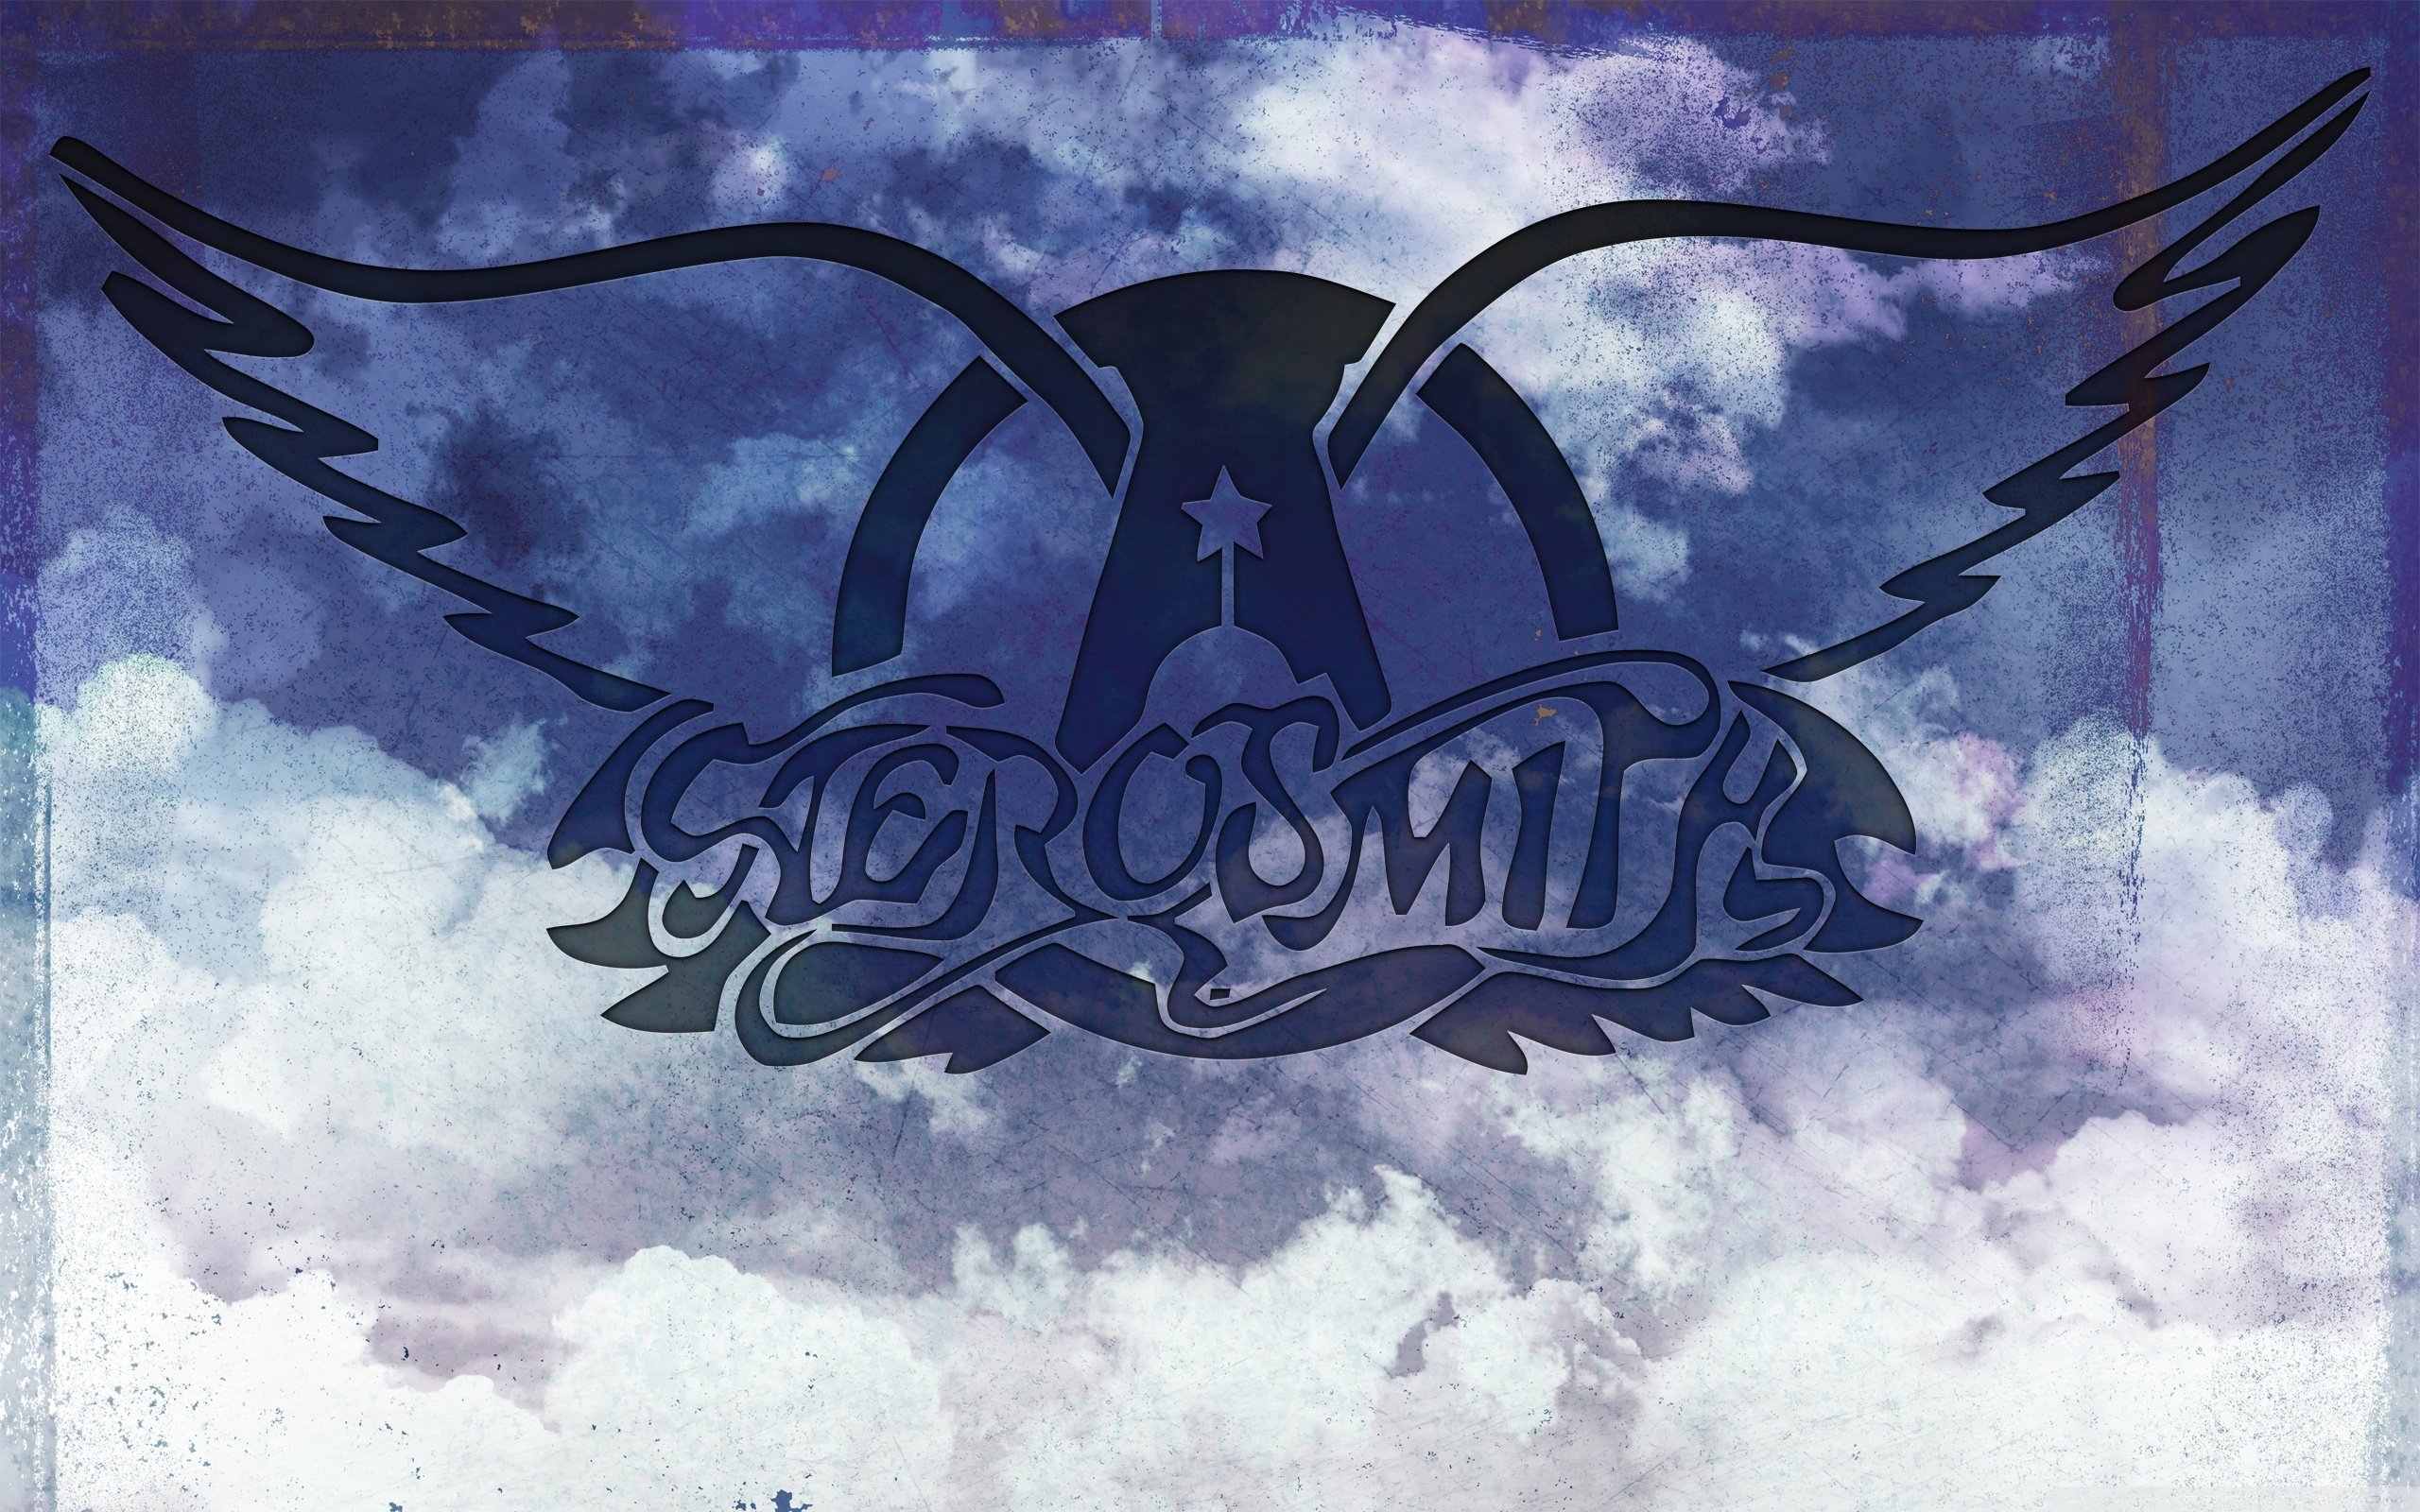 [49+] Aerosmith Wallpaper Desktop on WallpaperSafari